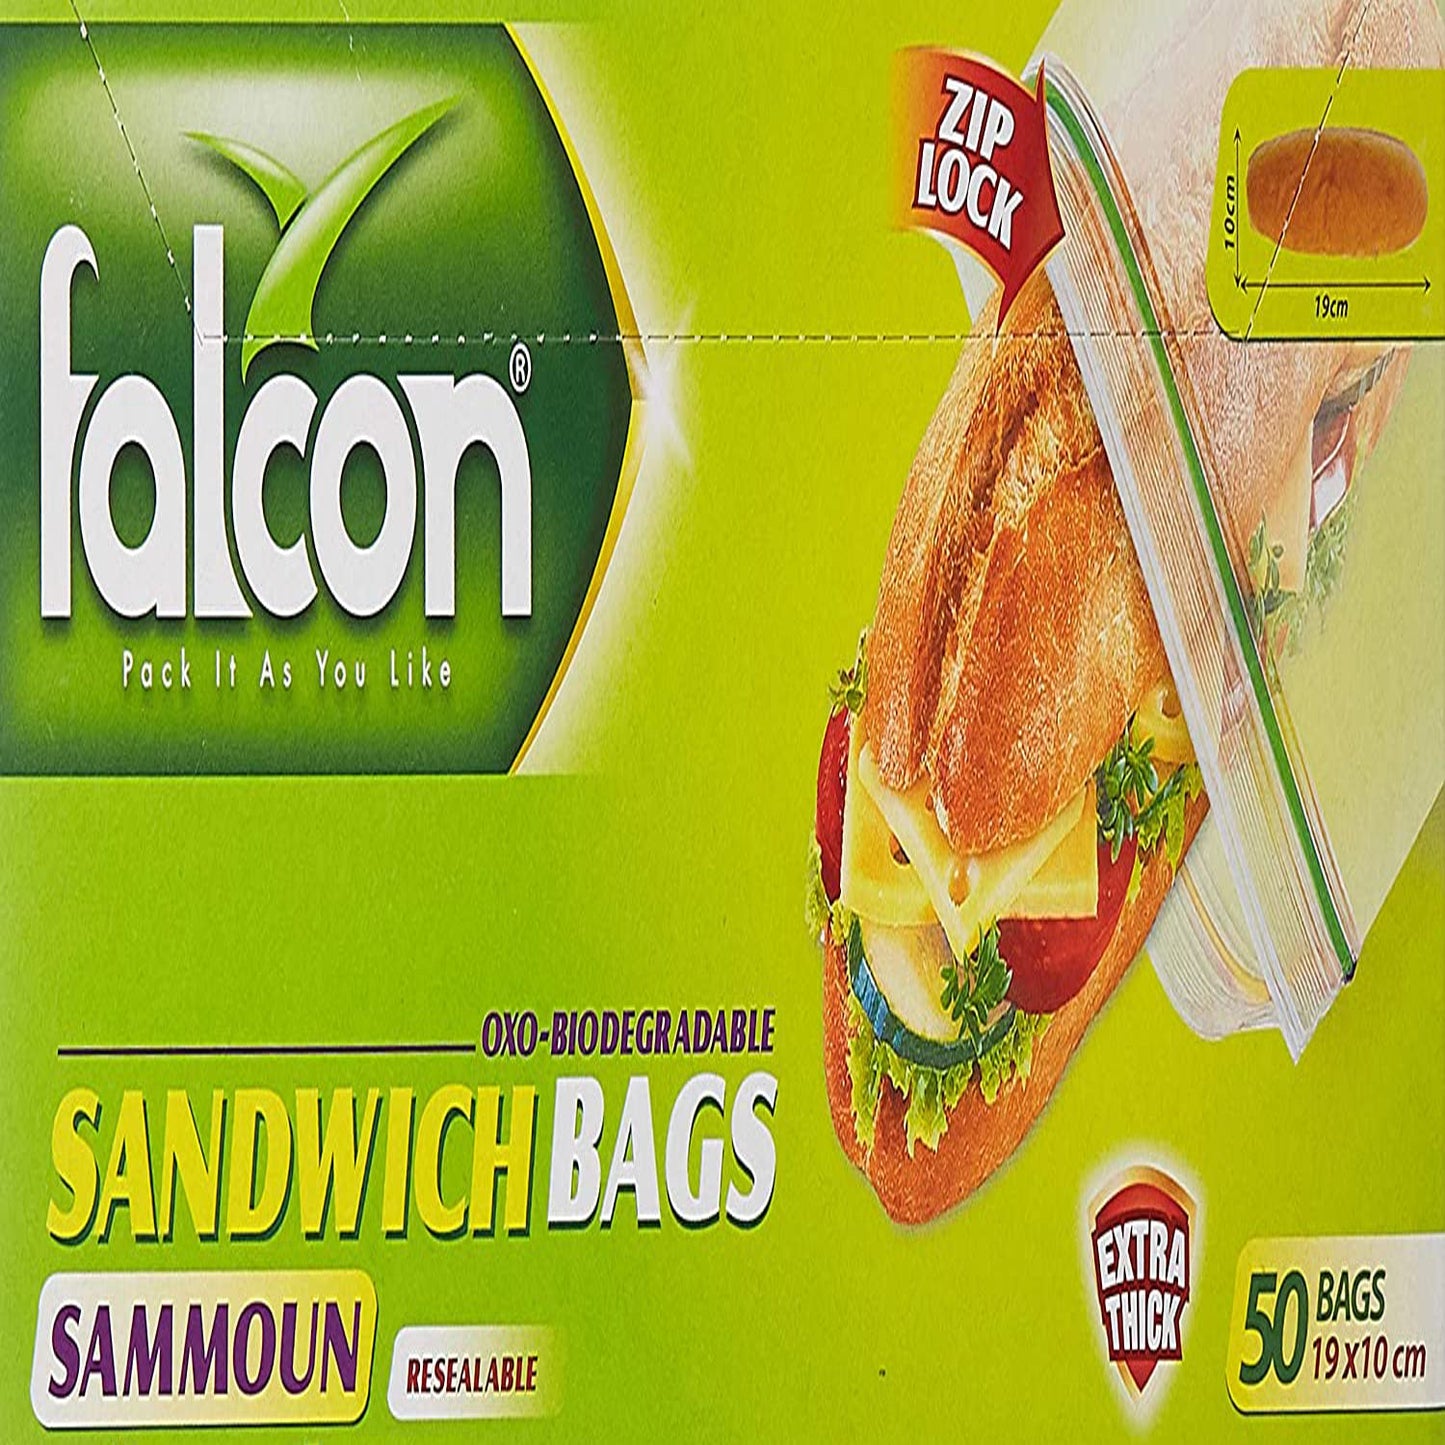 SAMOON SANDWICH BAG 19 X 10 CM, 50PCS